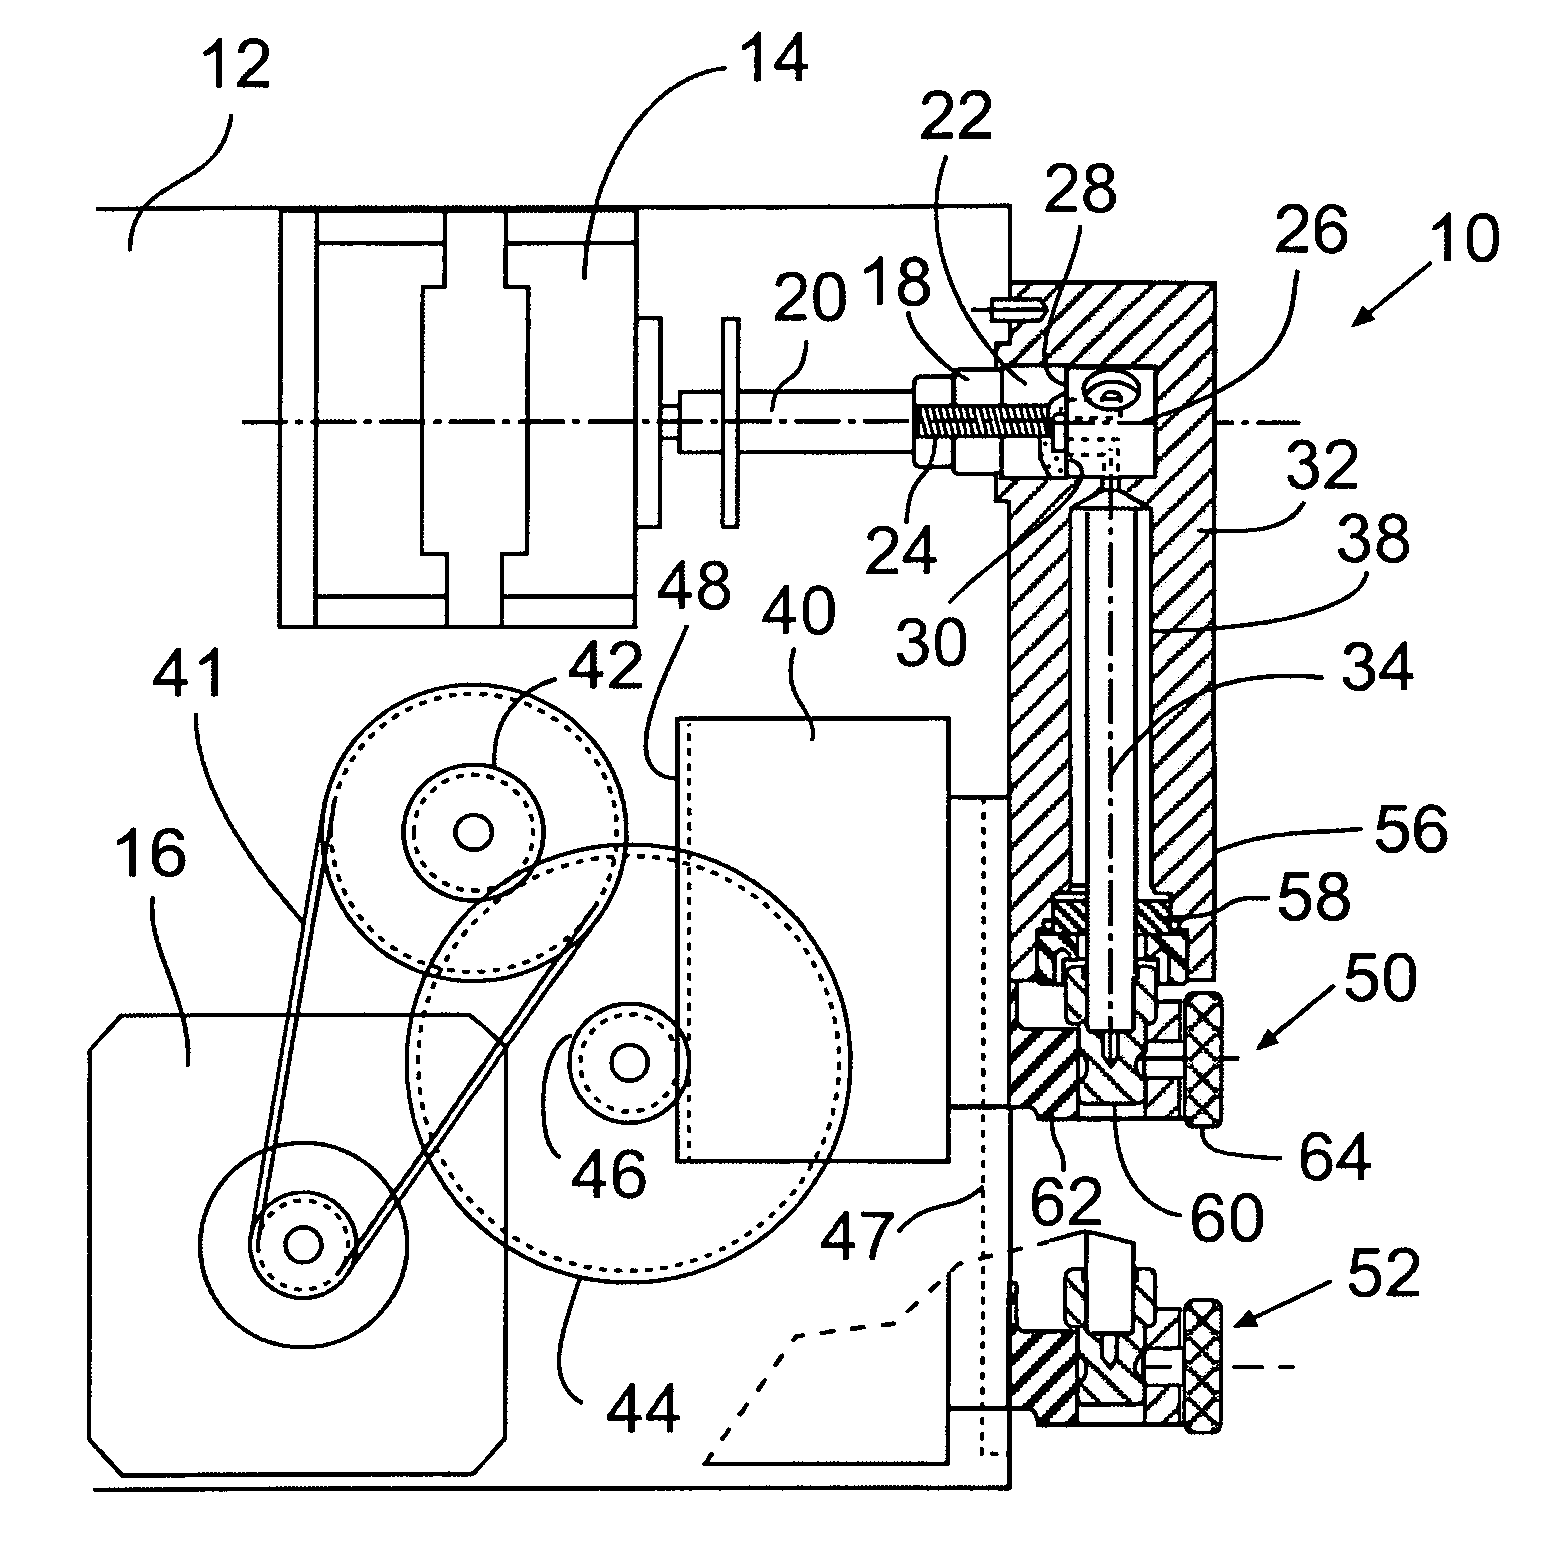 Integrated pump and ceramic valve